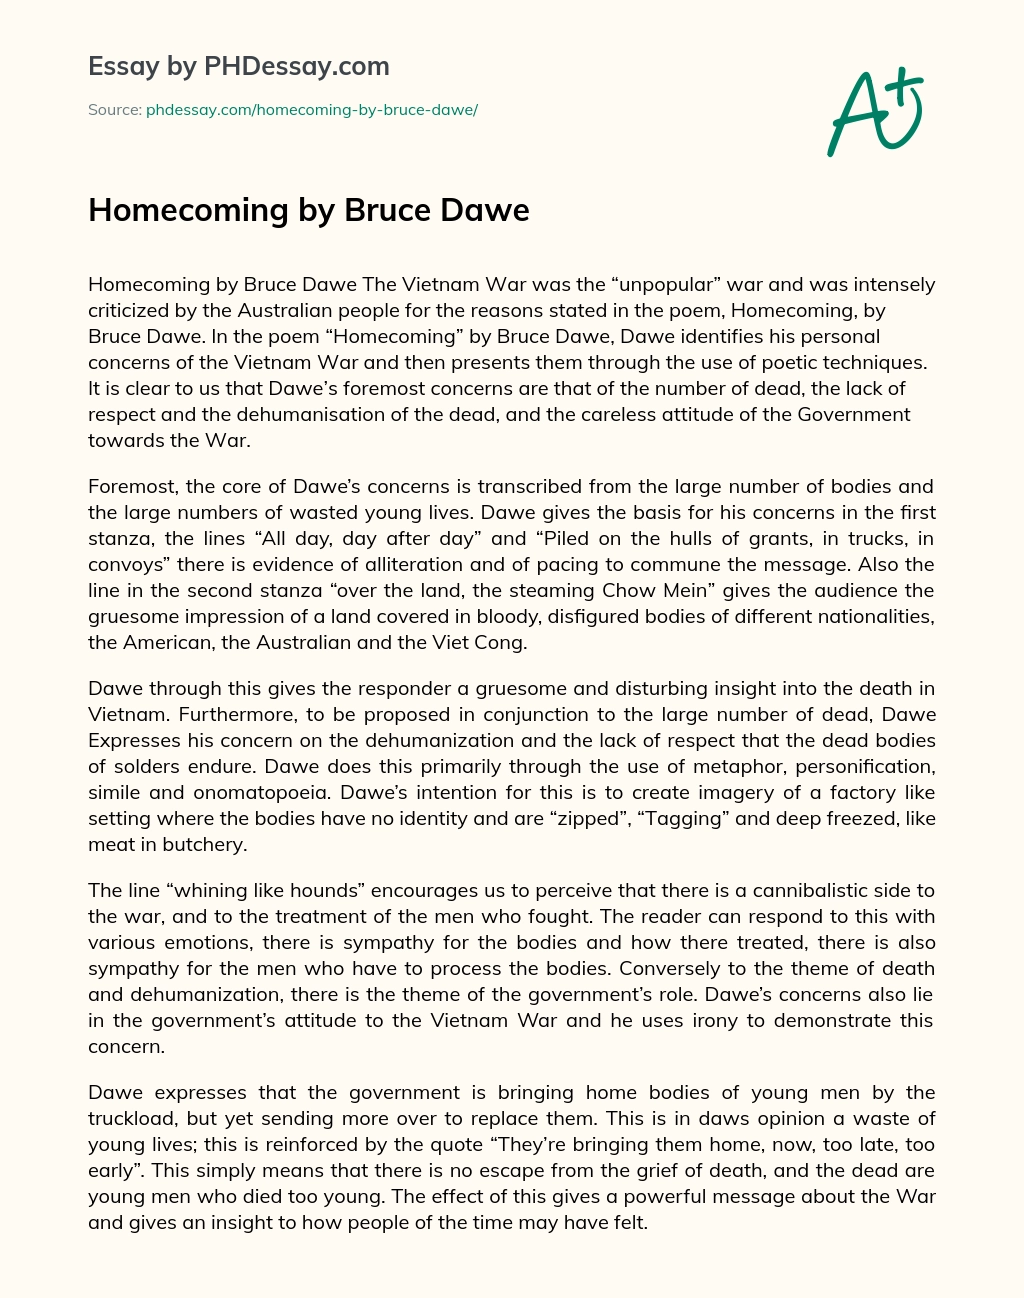 Homecoming by Bruce Dawe essay